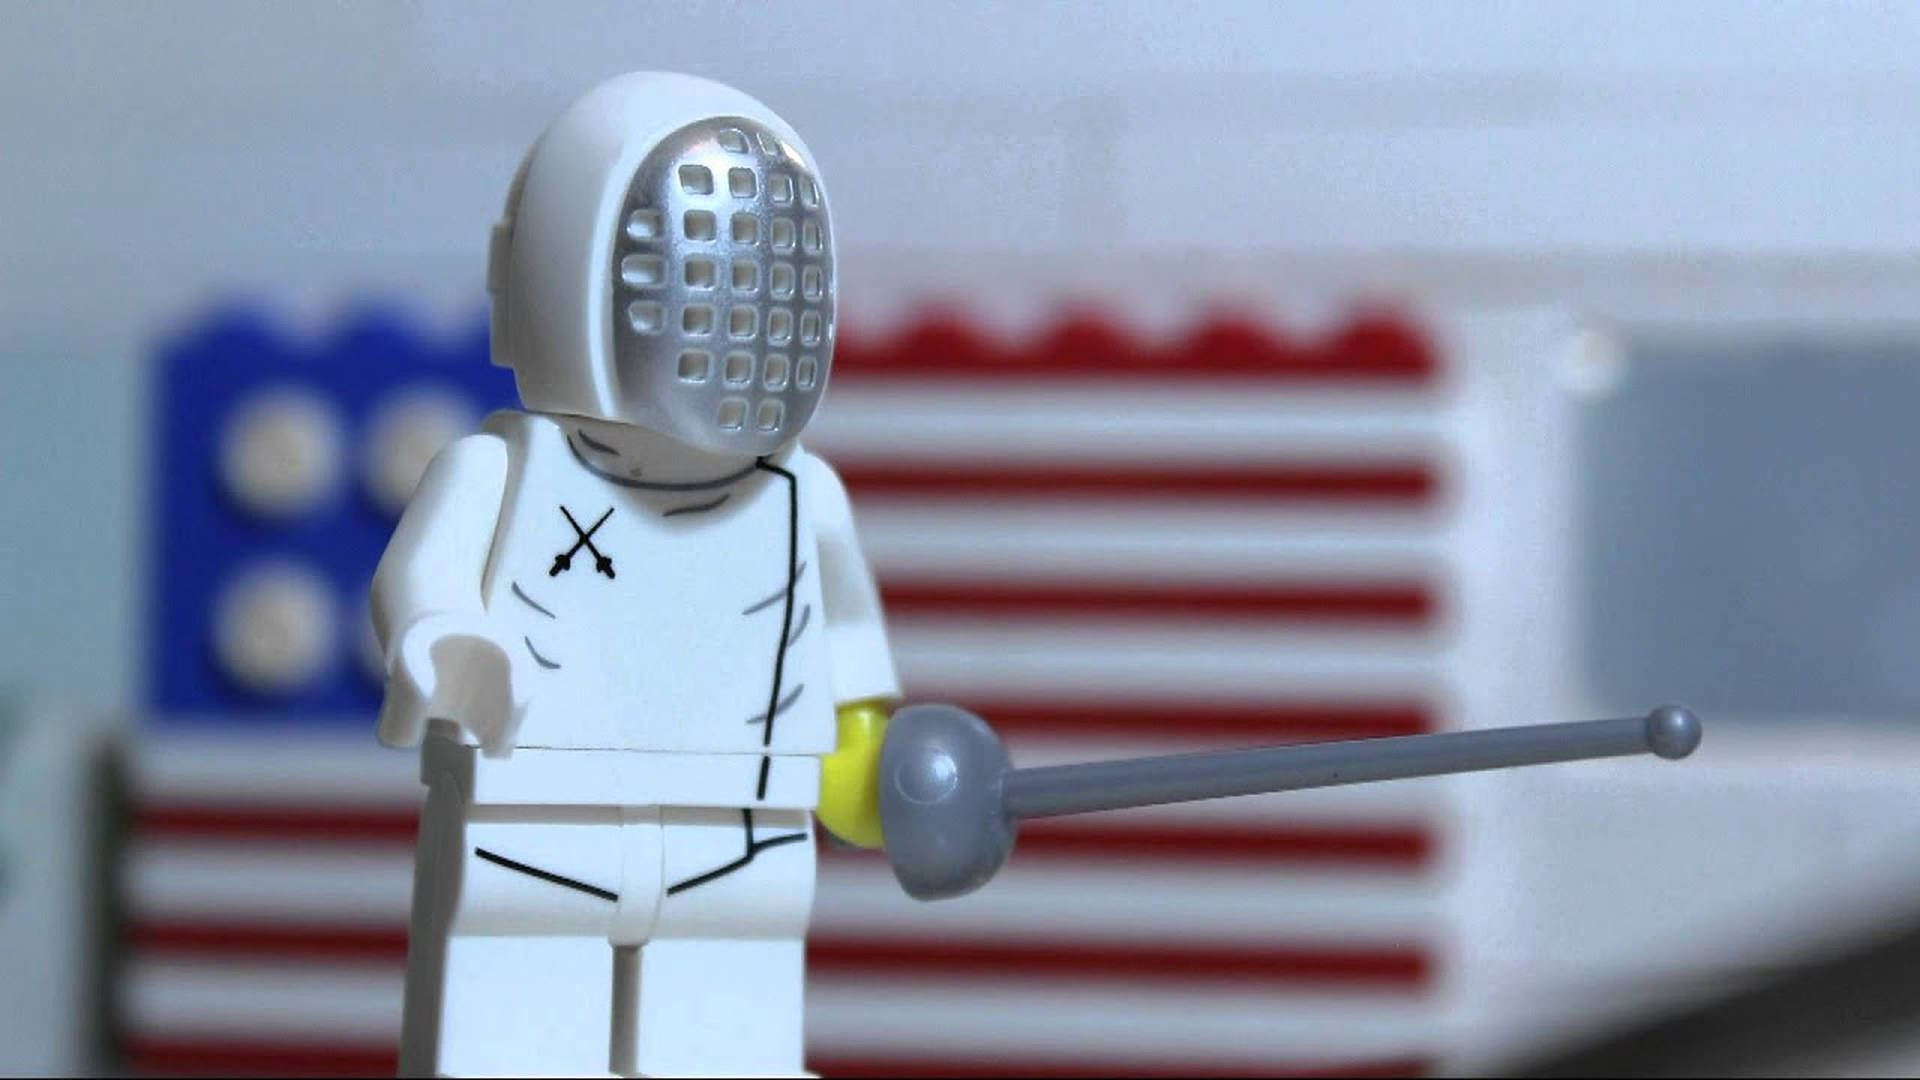 Scherma Lego In Miniatura Sfondo